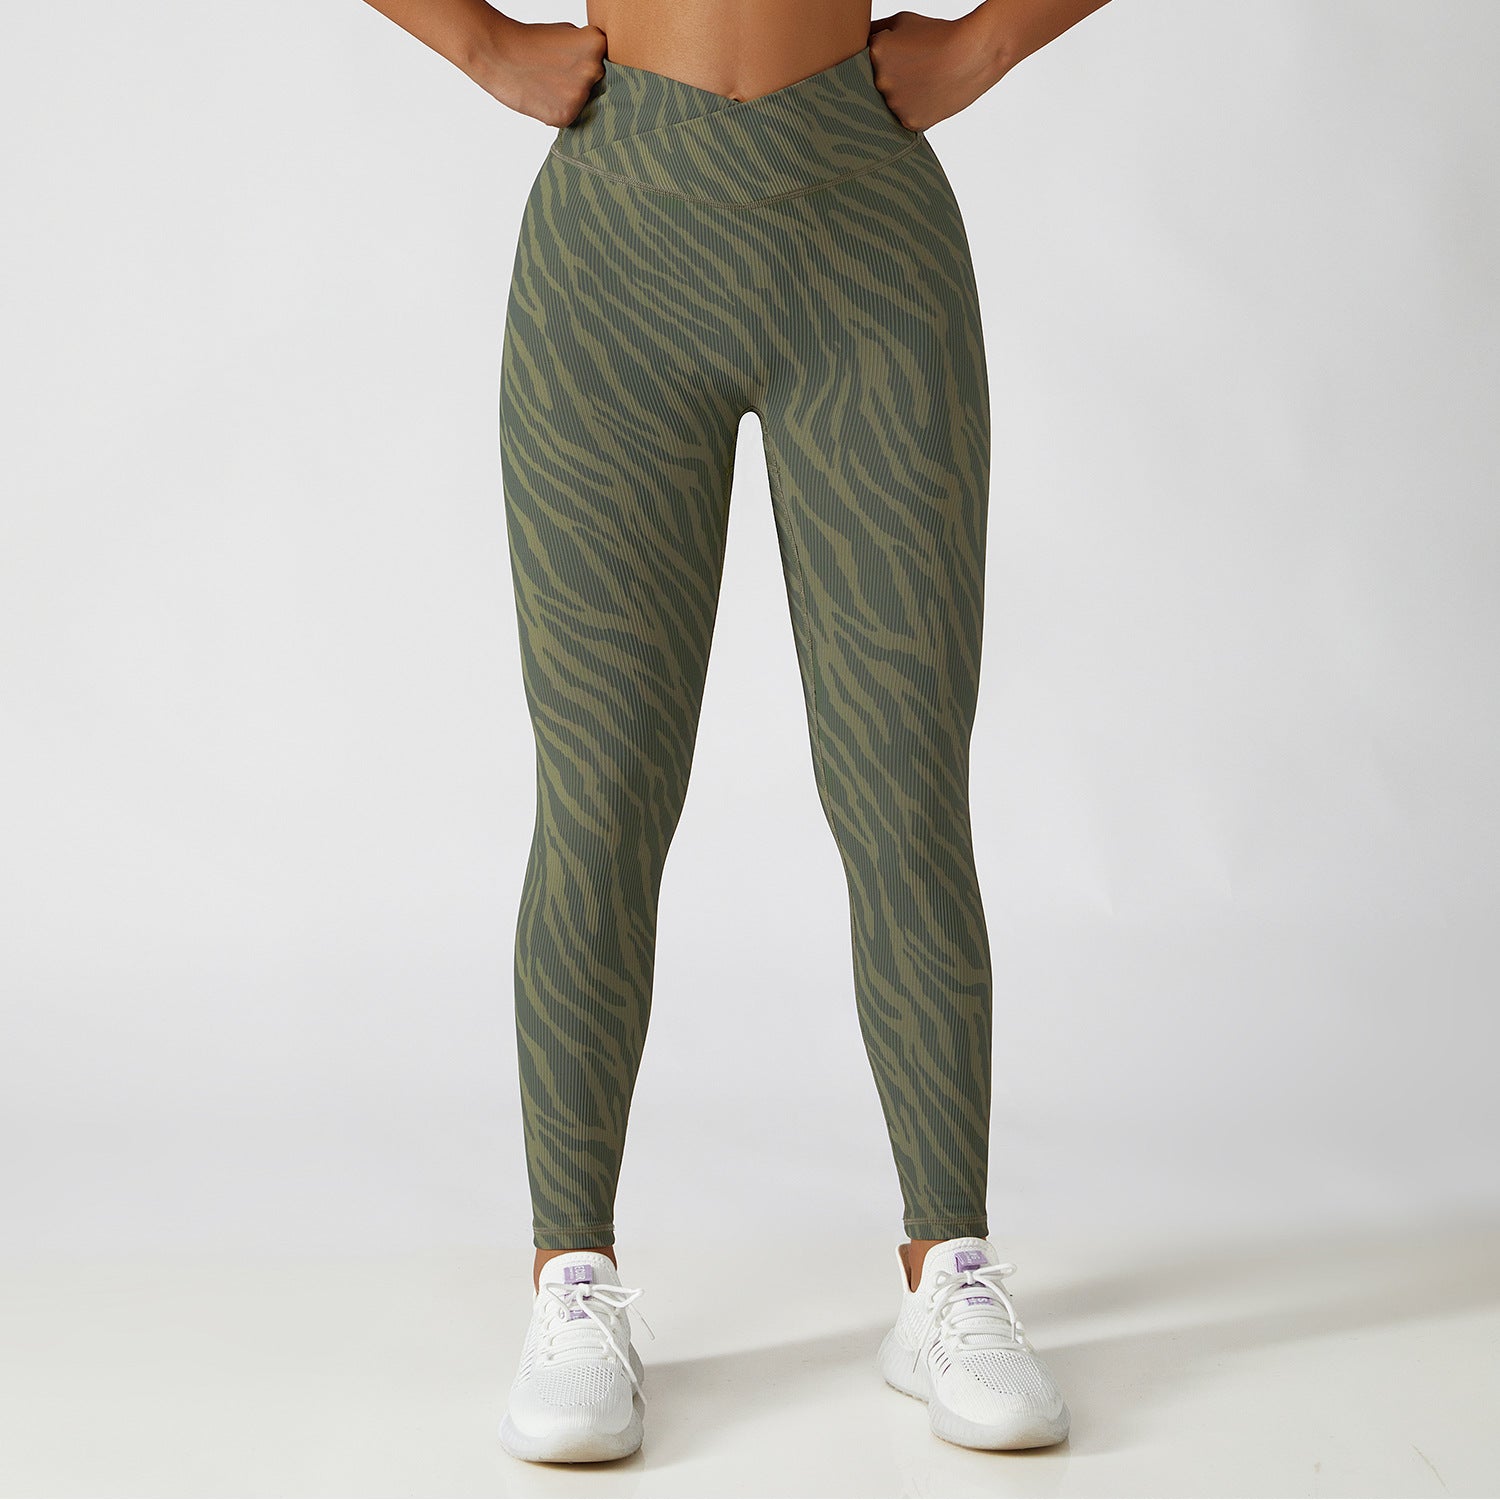 Wholesale Fitness Tight Yoga Pants